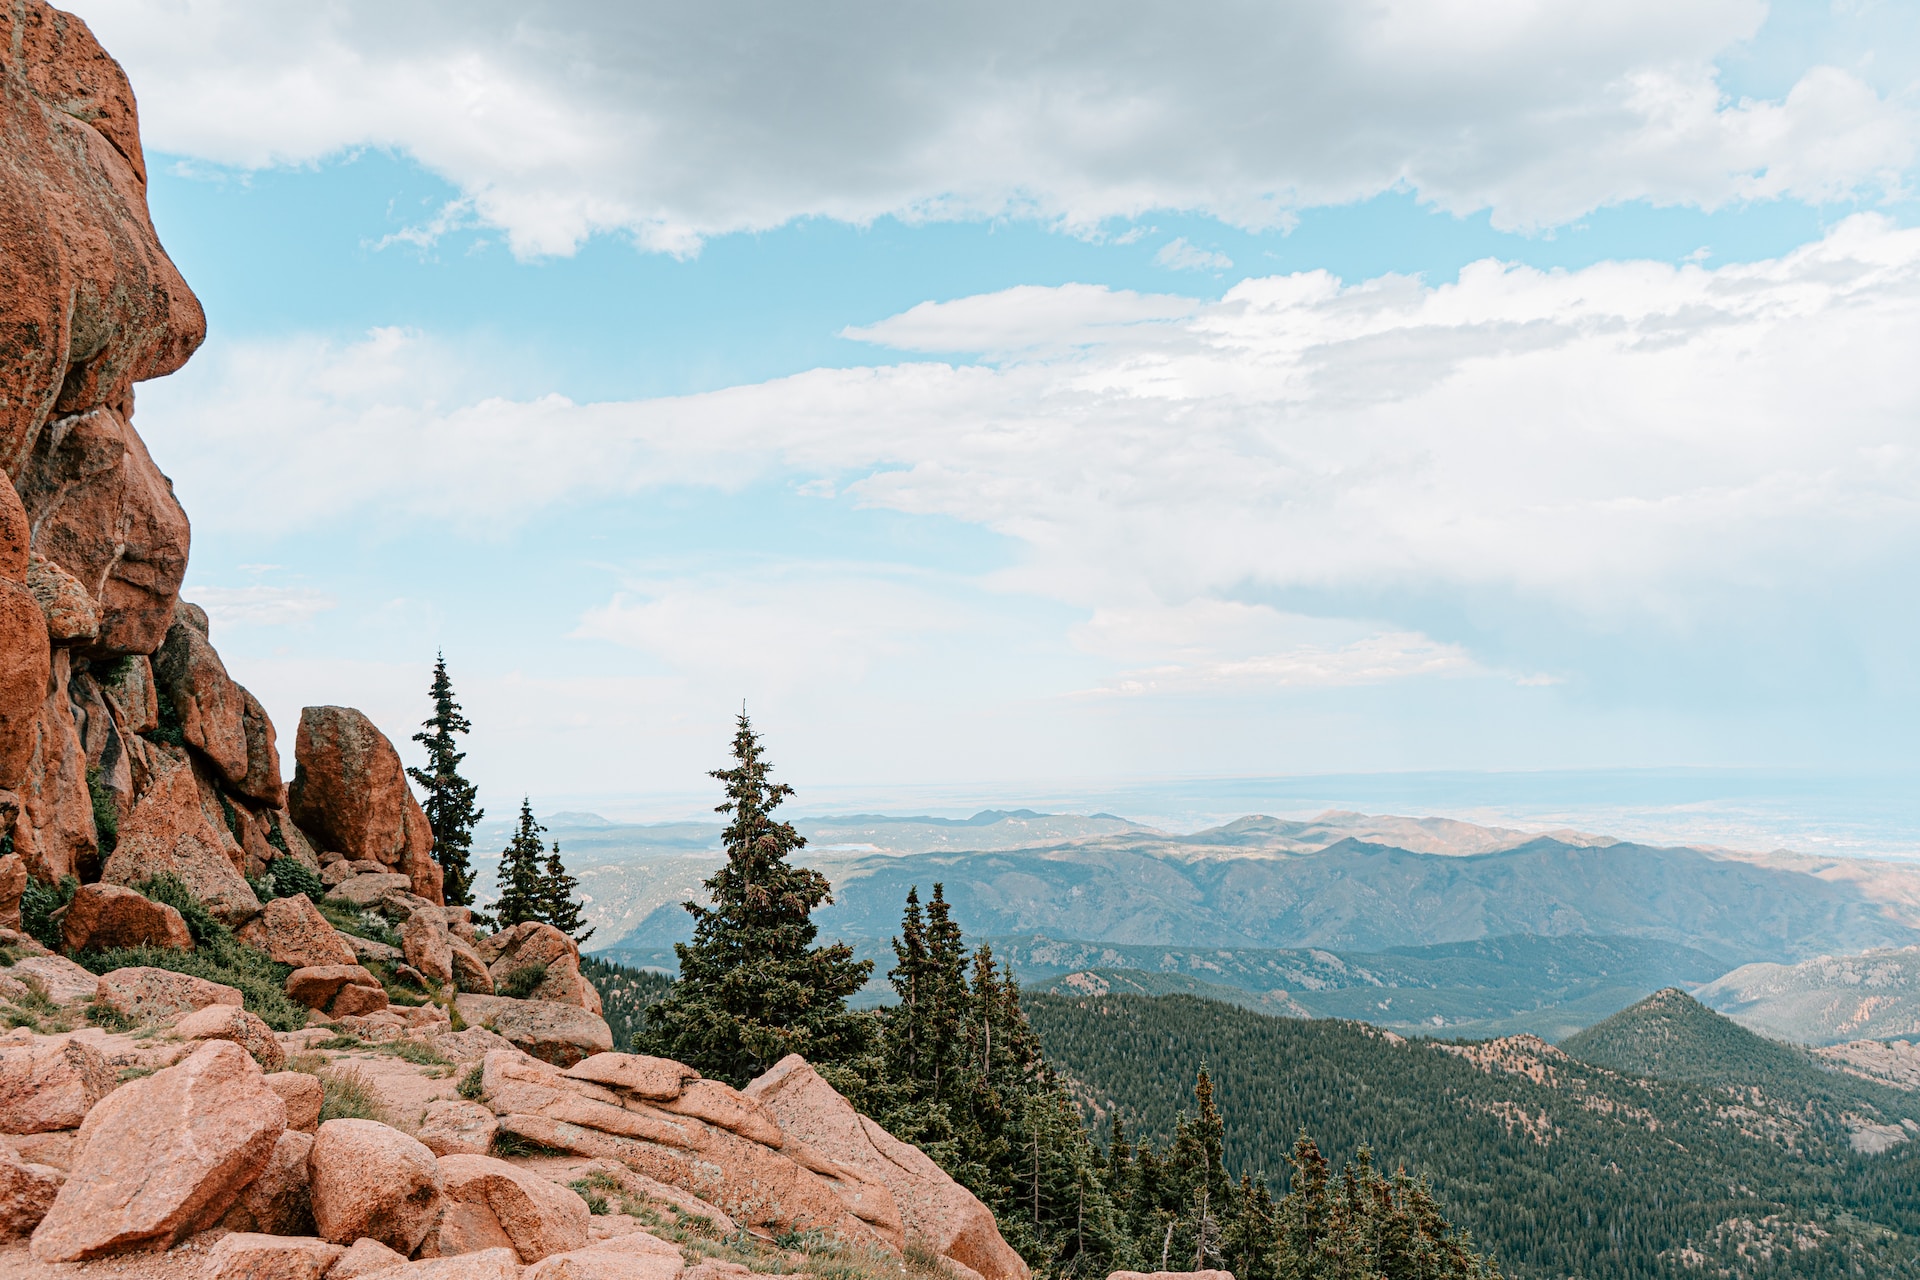 Plan a day trip to Pike's Peak, Colorado